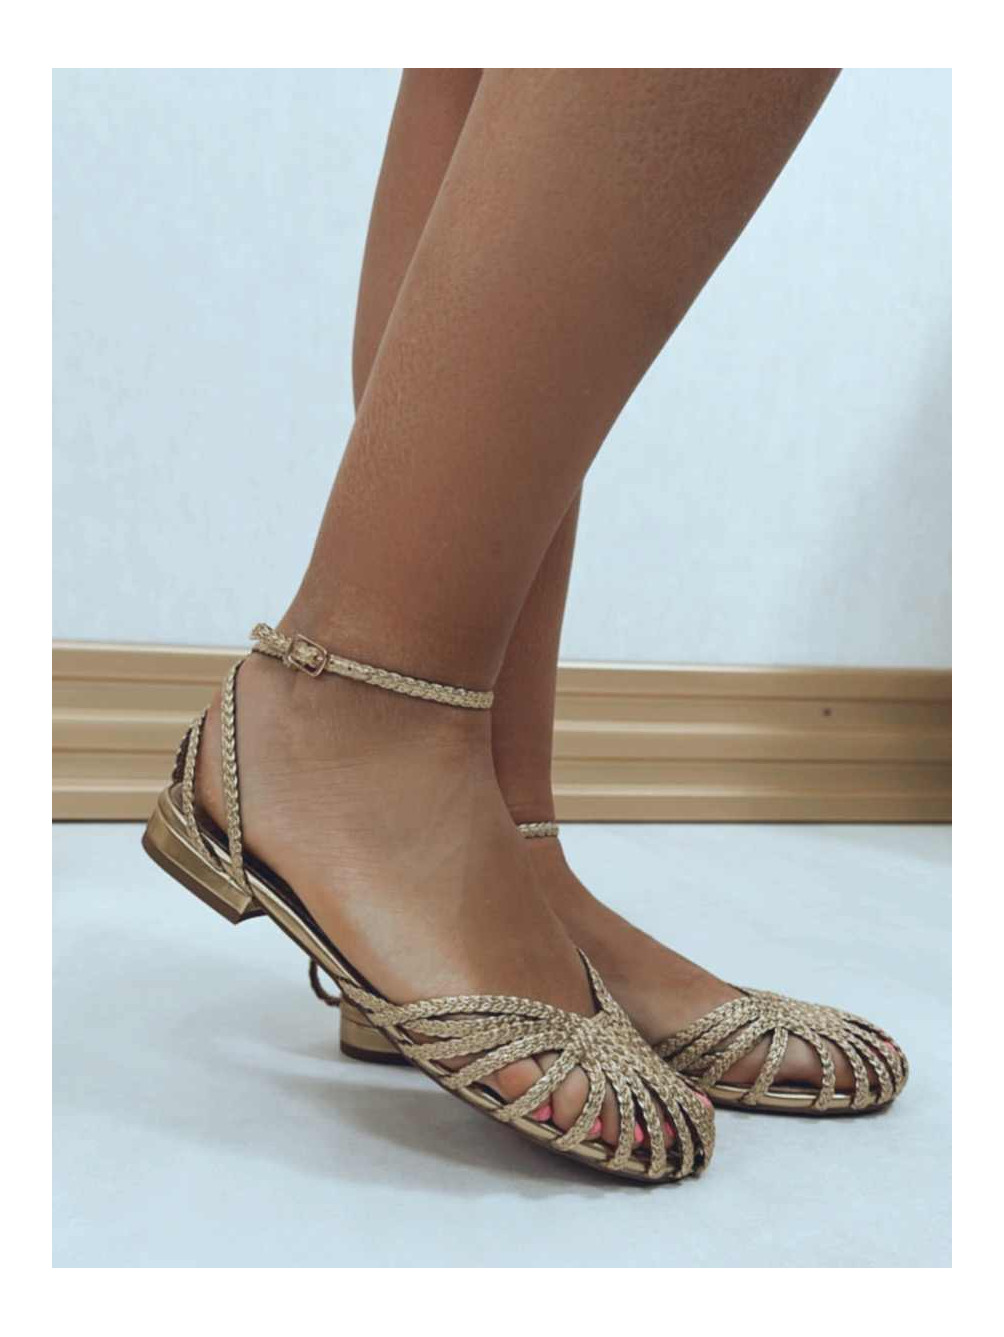 Sandalias Trenzadas, sandalias baratas doradas, estilo bailarinas de verano, Mariquita Trasquilá